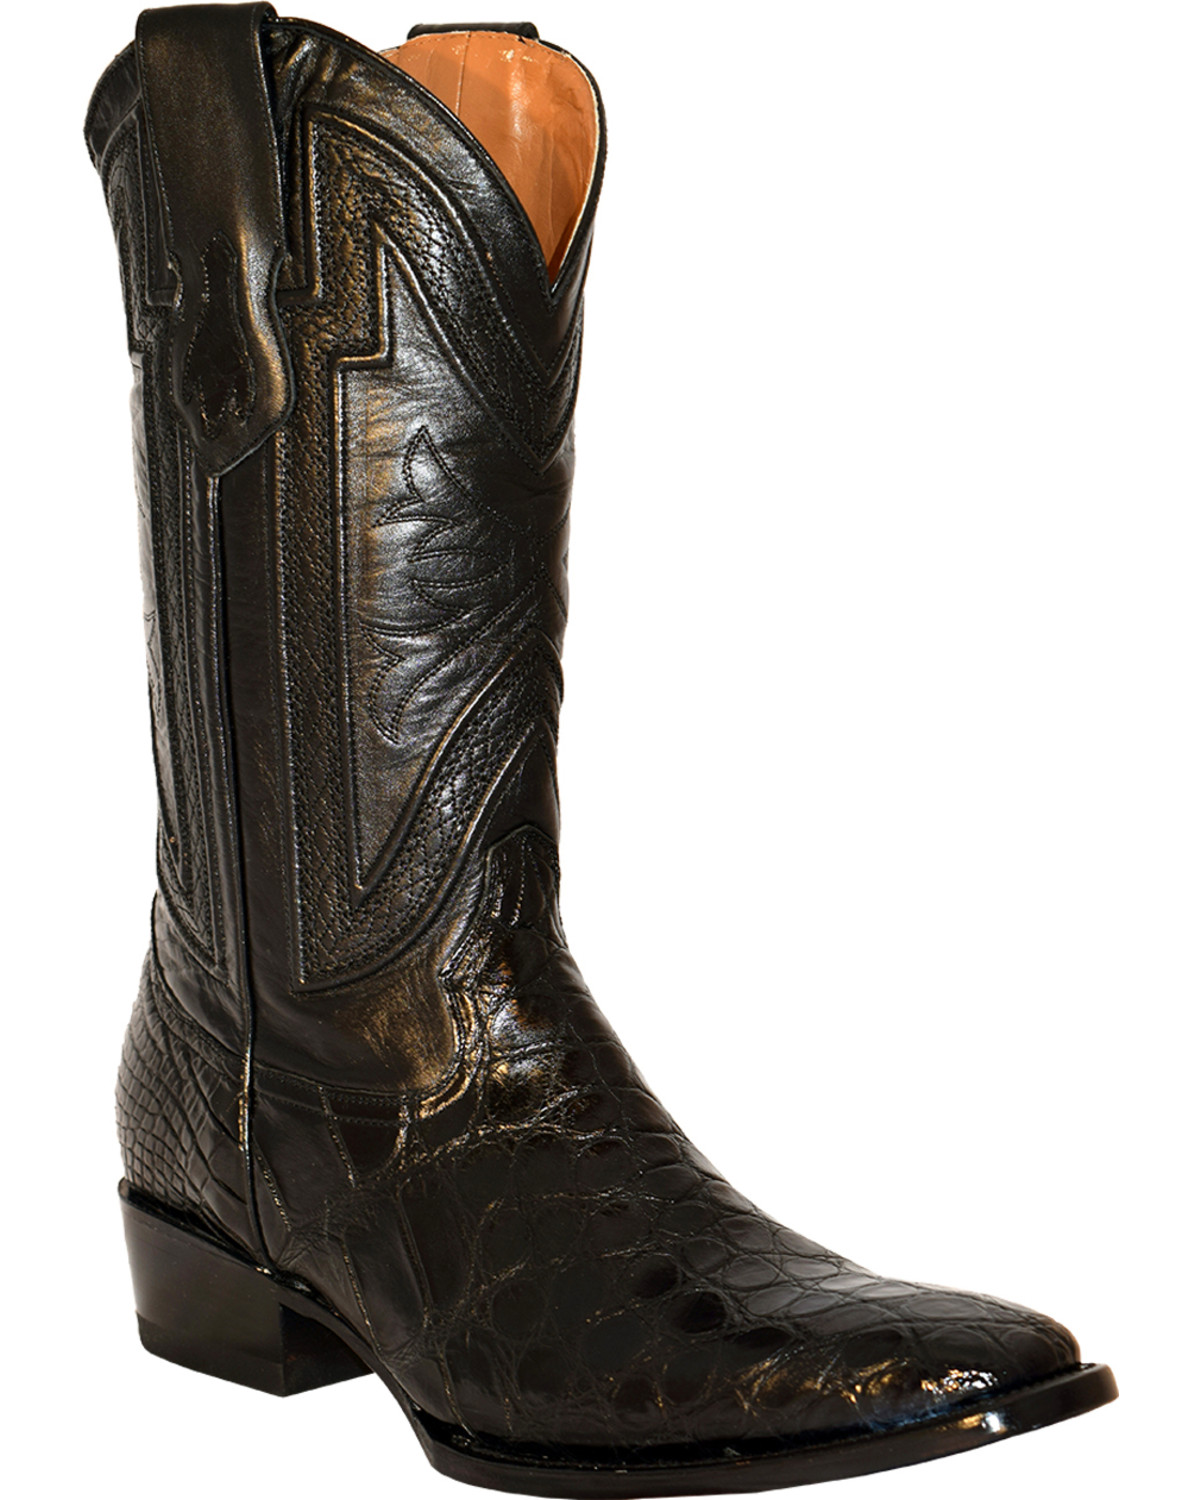 Ferrini Men's Stallion Alligator Belly Exotic Western Boots - Broad Square Toe